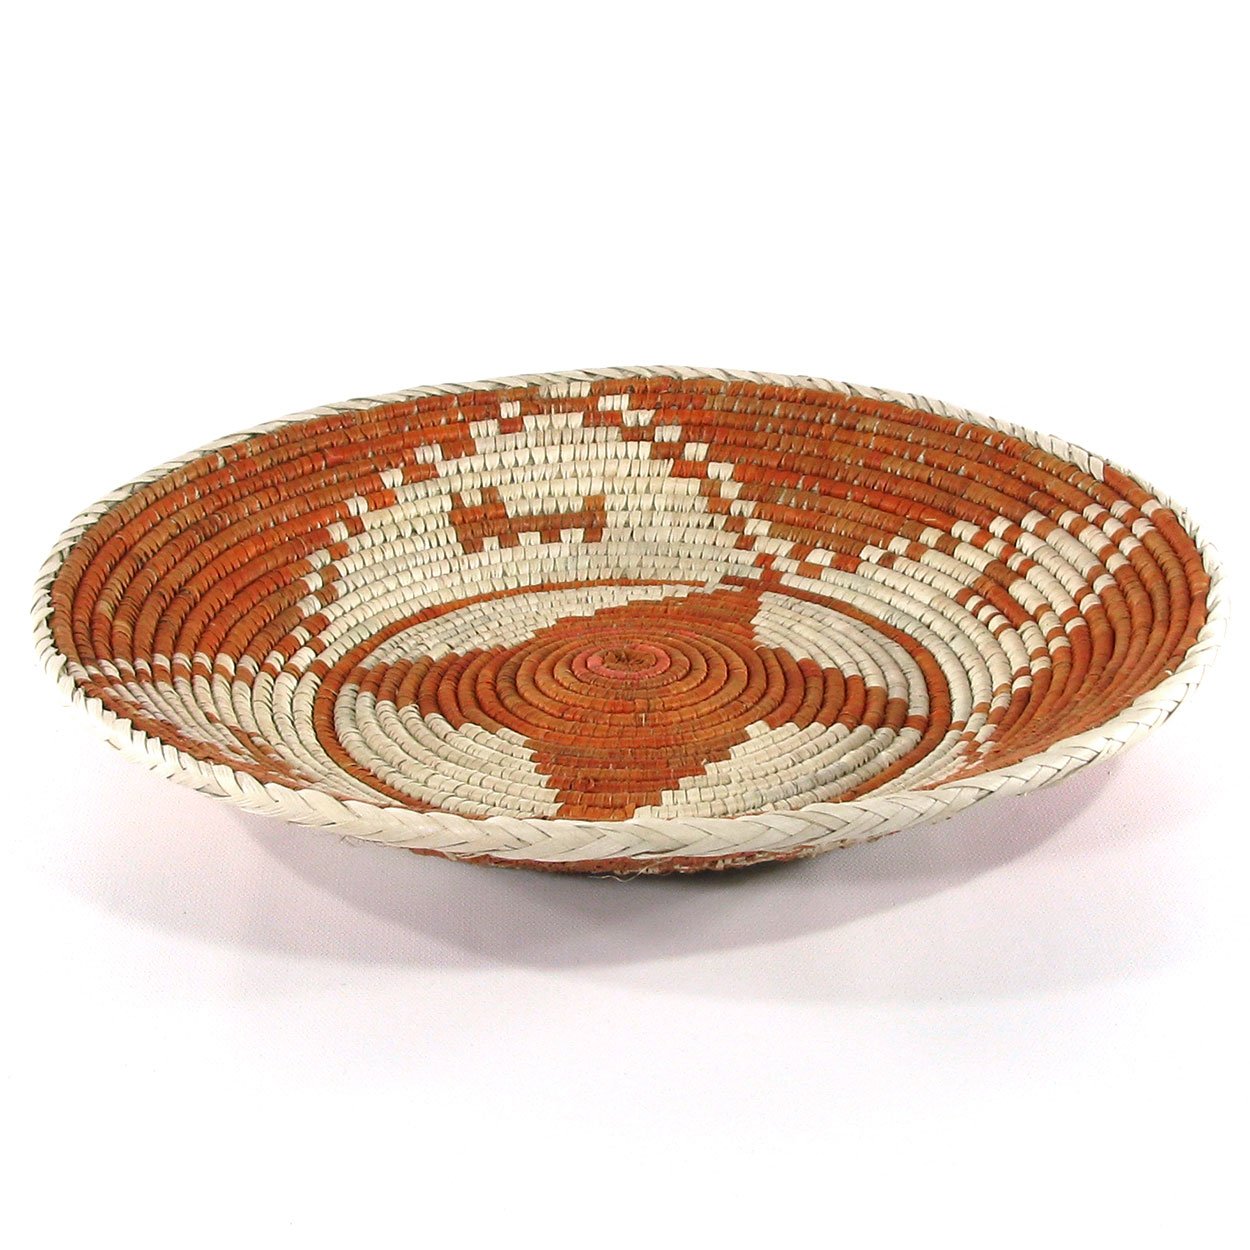 140259 - 13.5in Woven Bowl Basket - Flower Animals 3